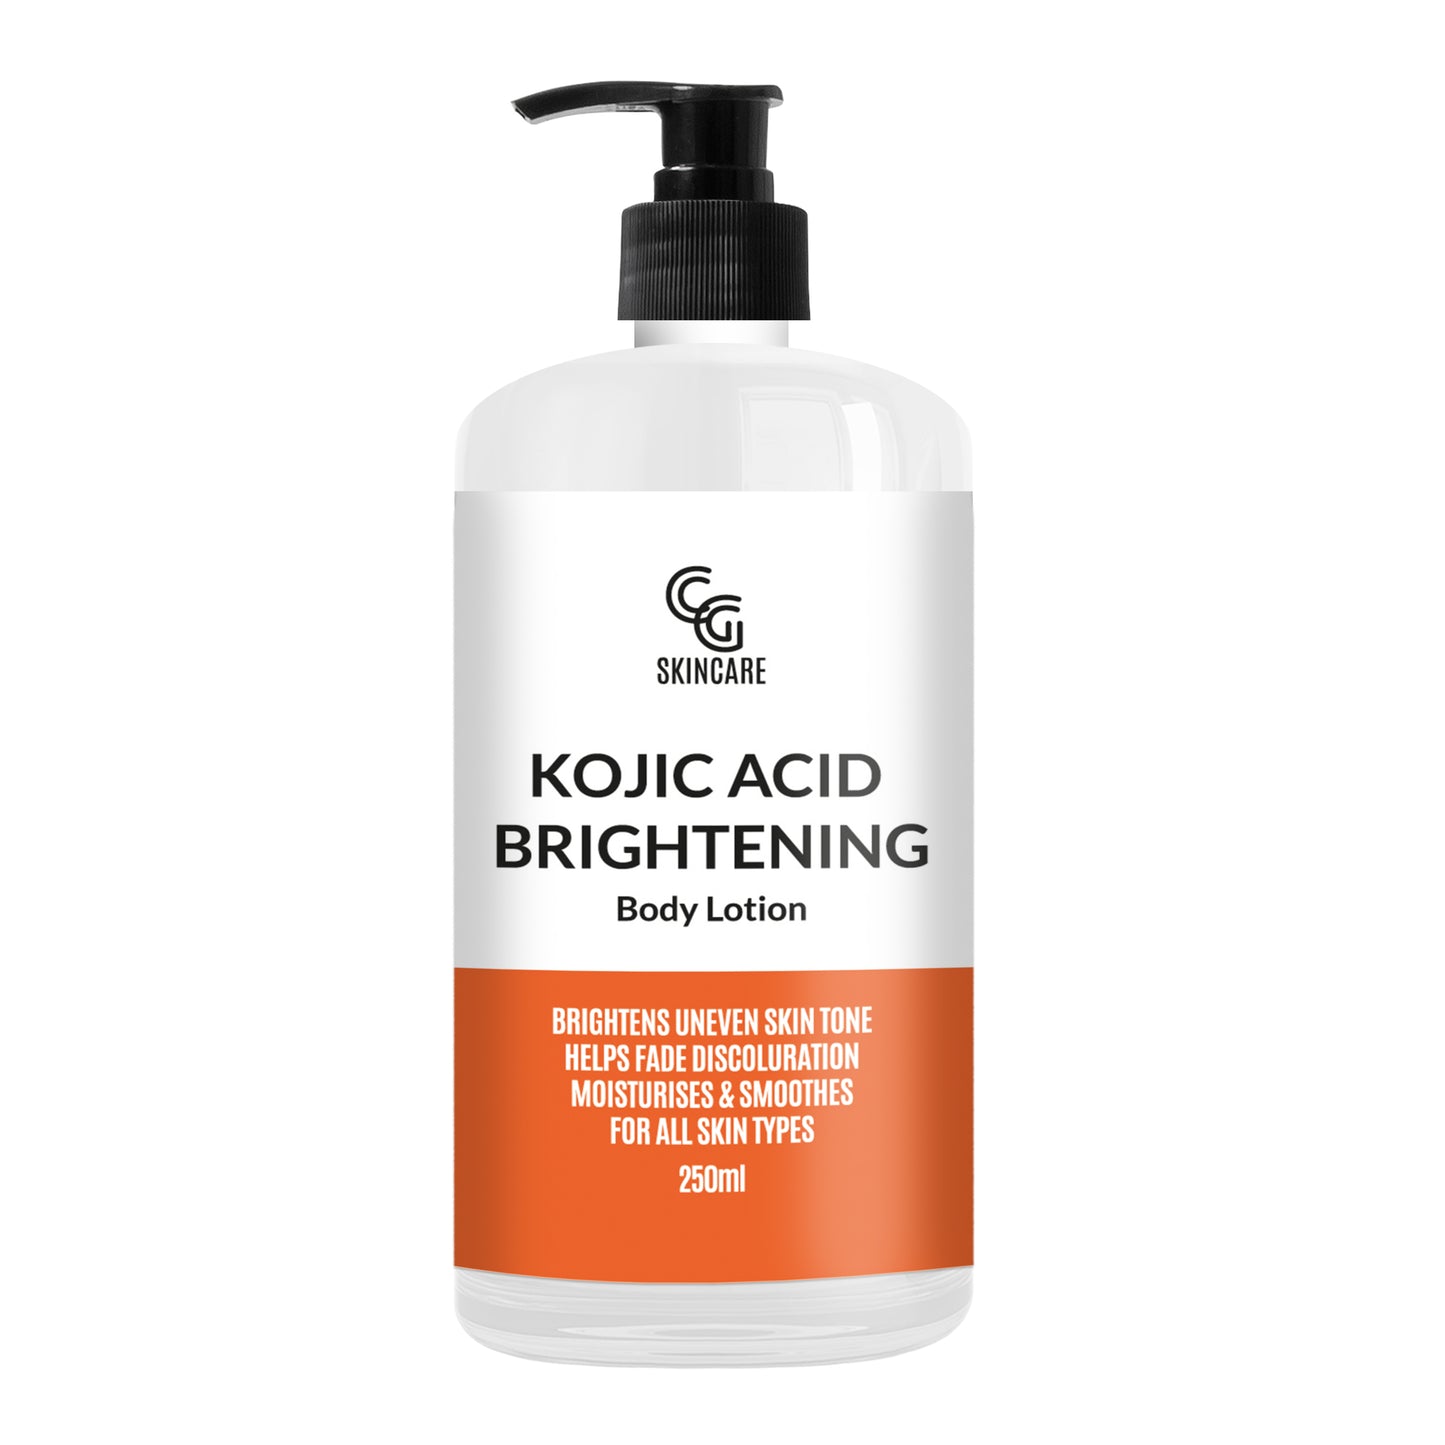 Kojic Acid Brightening Body Lotion 250ml